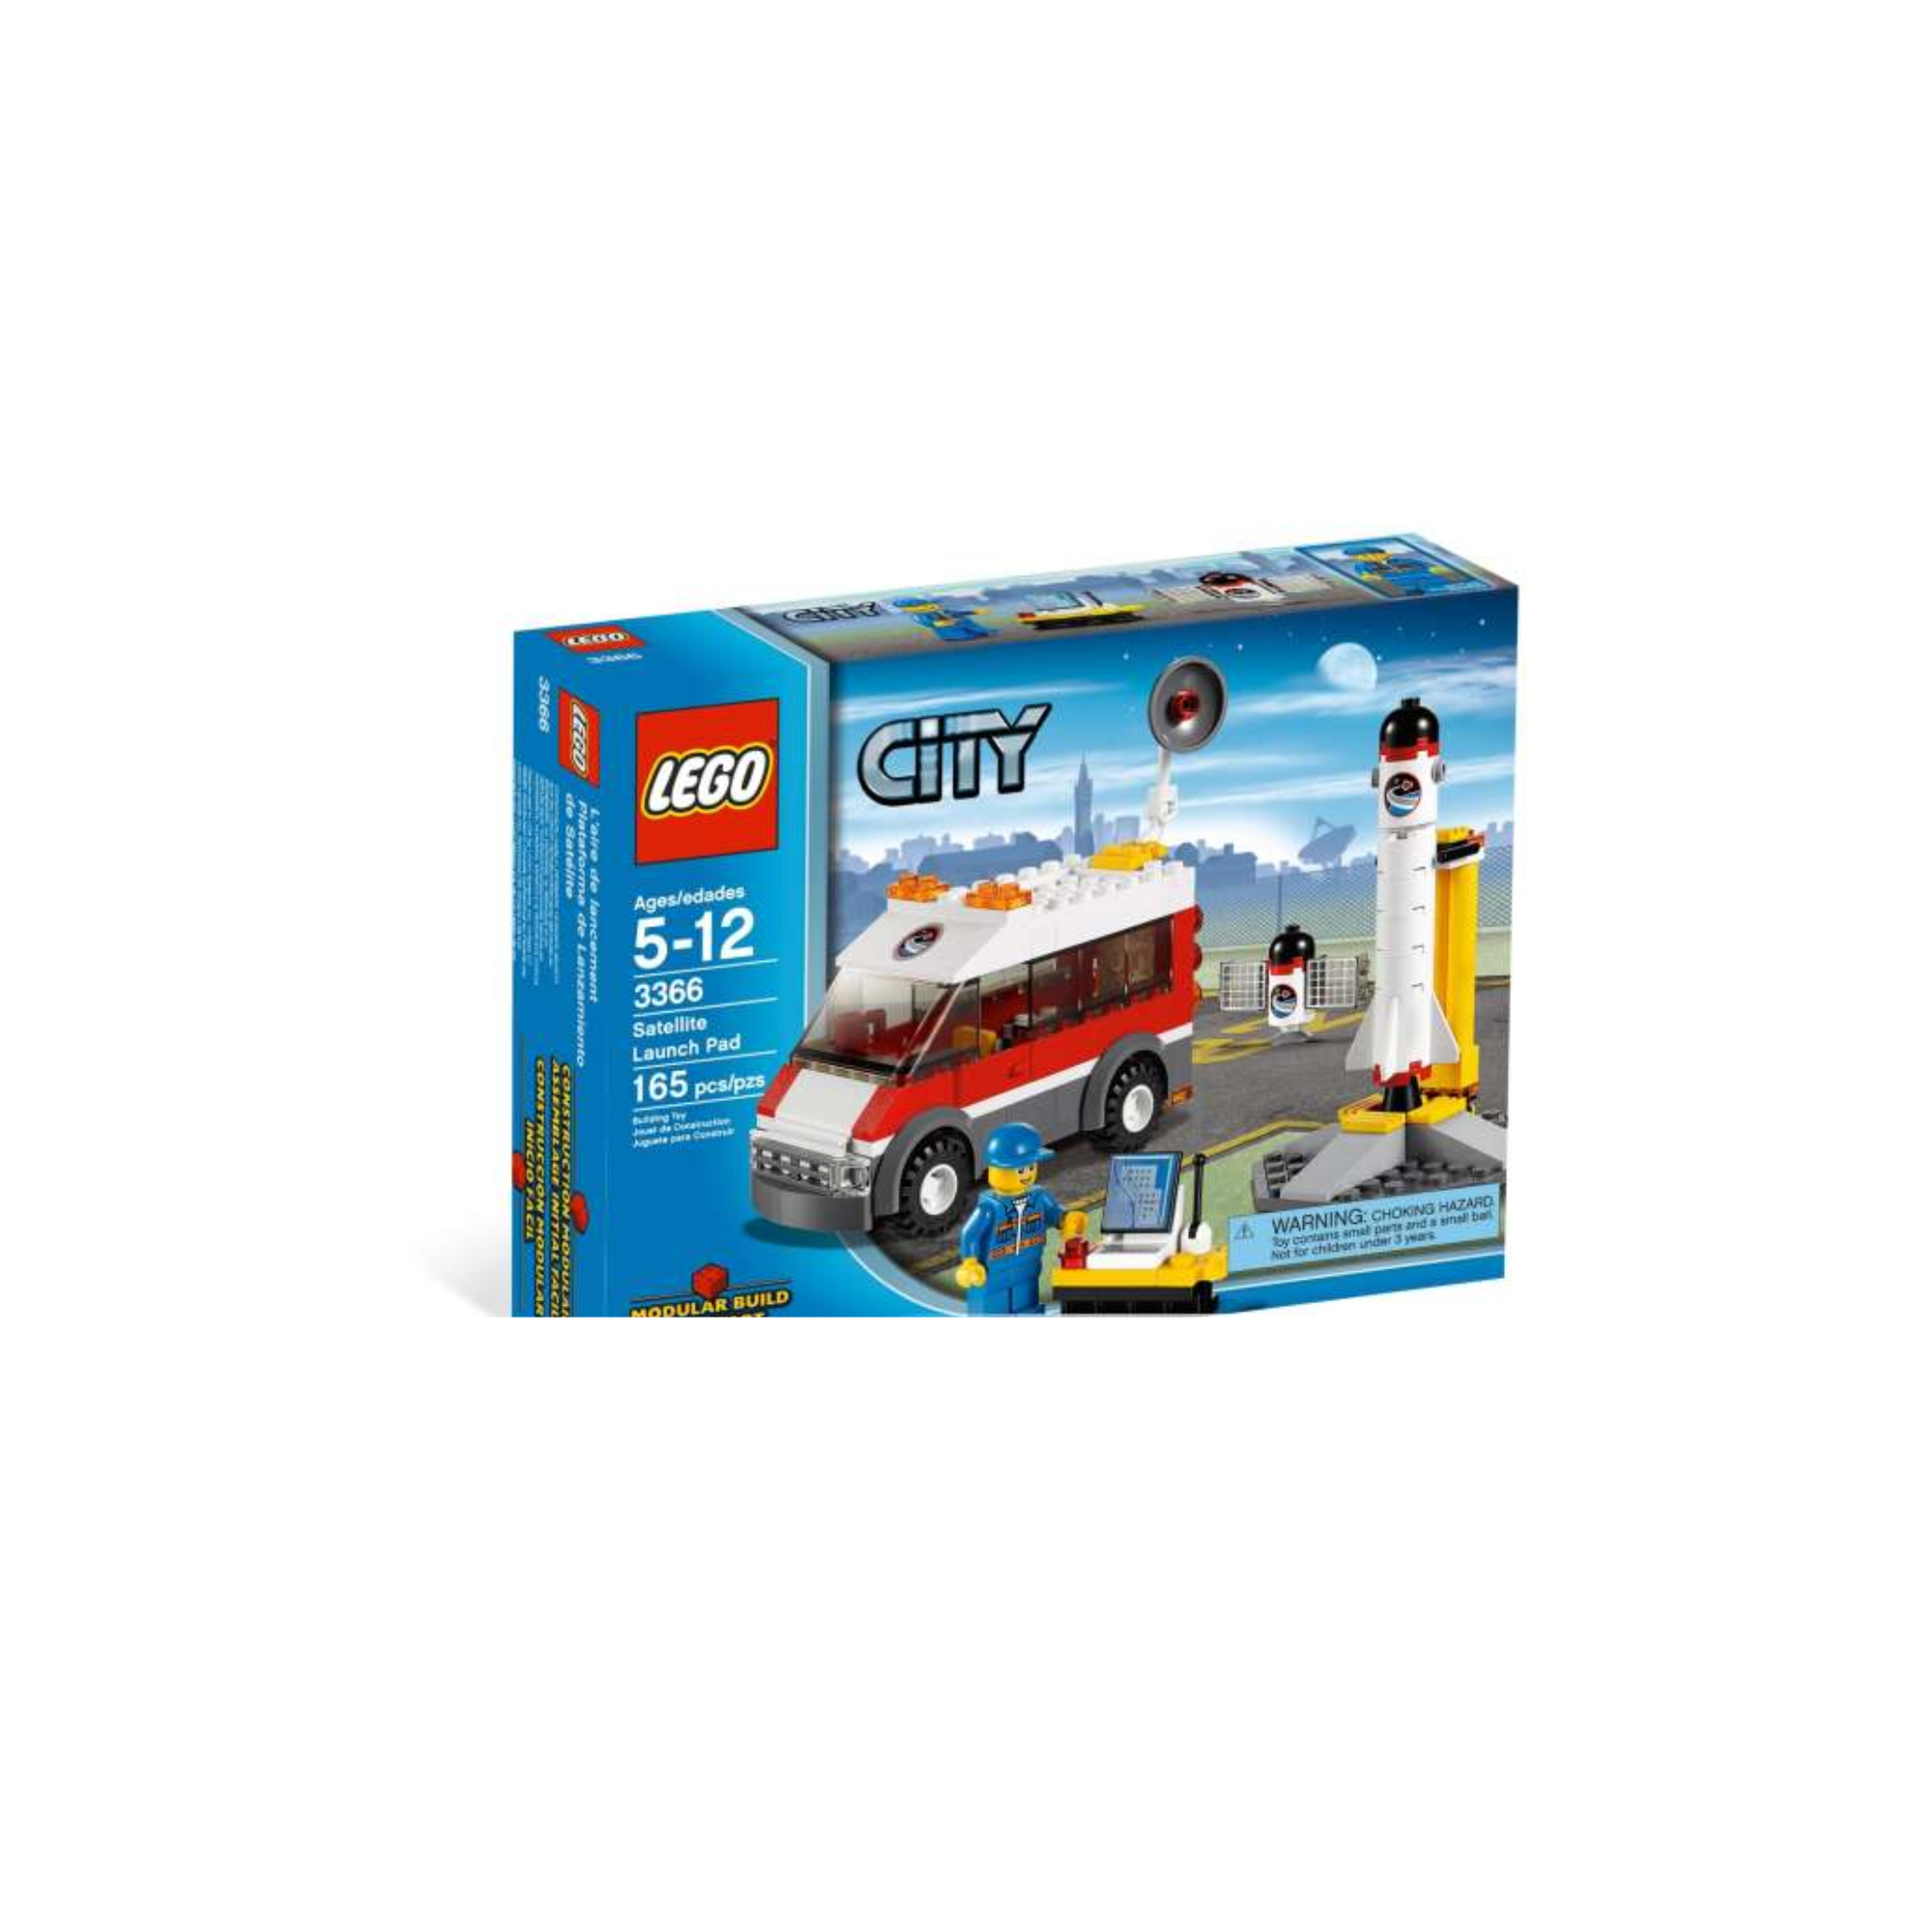 Lego City Satellite Launch Pad